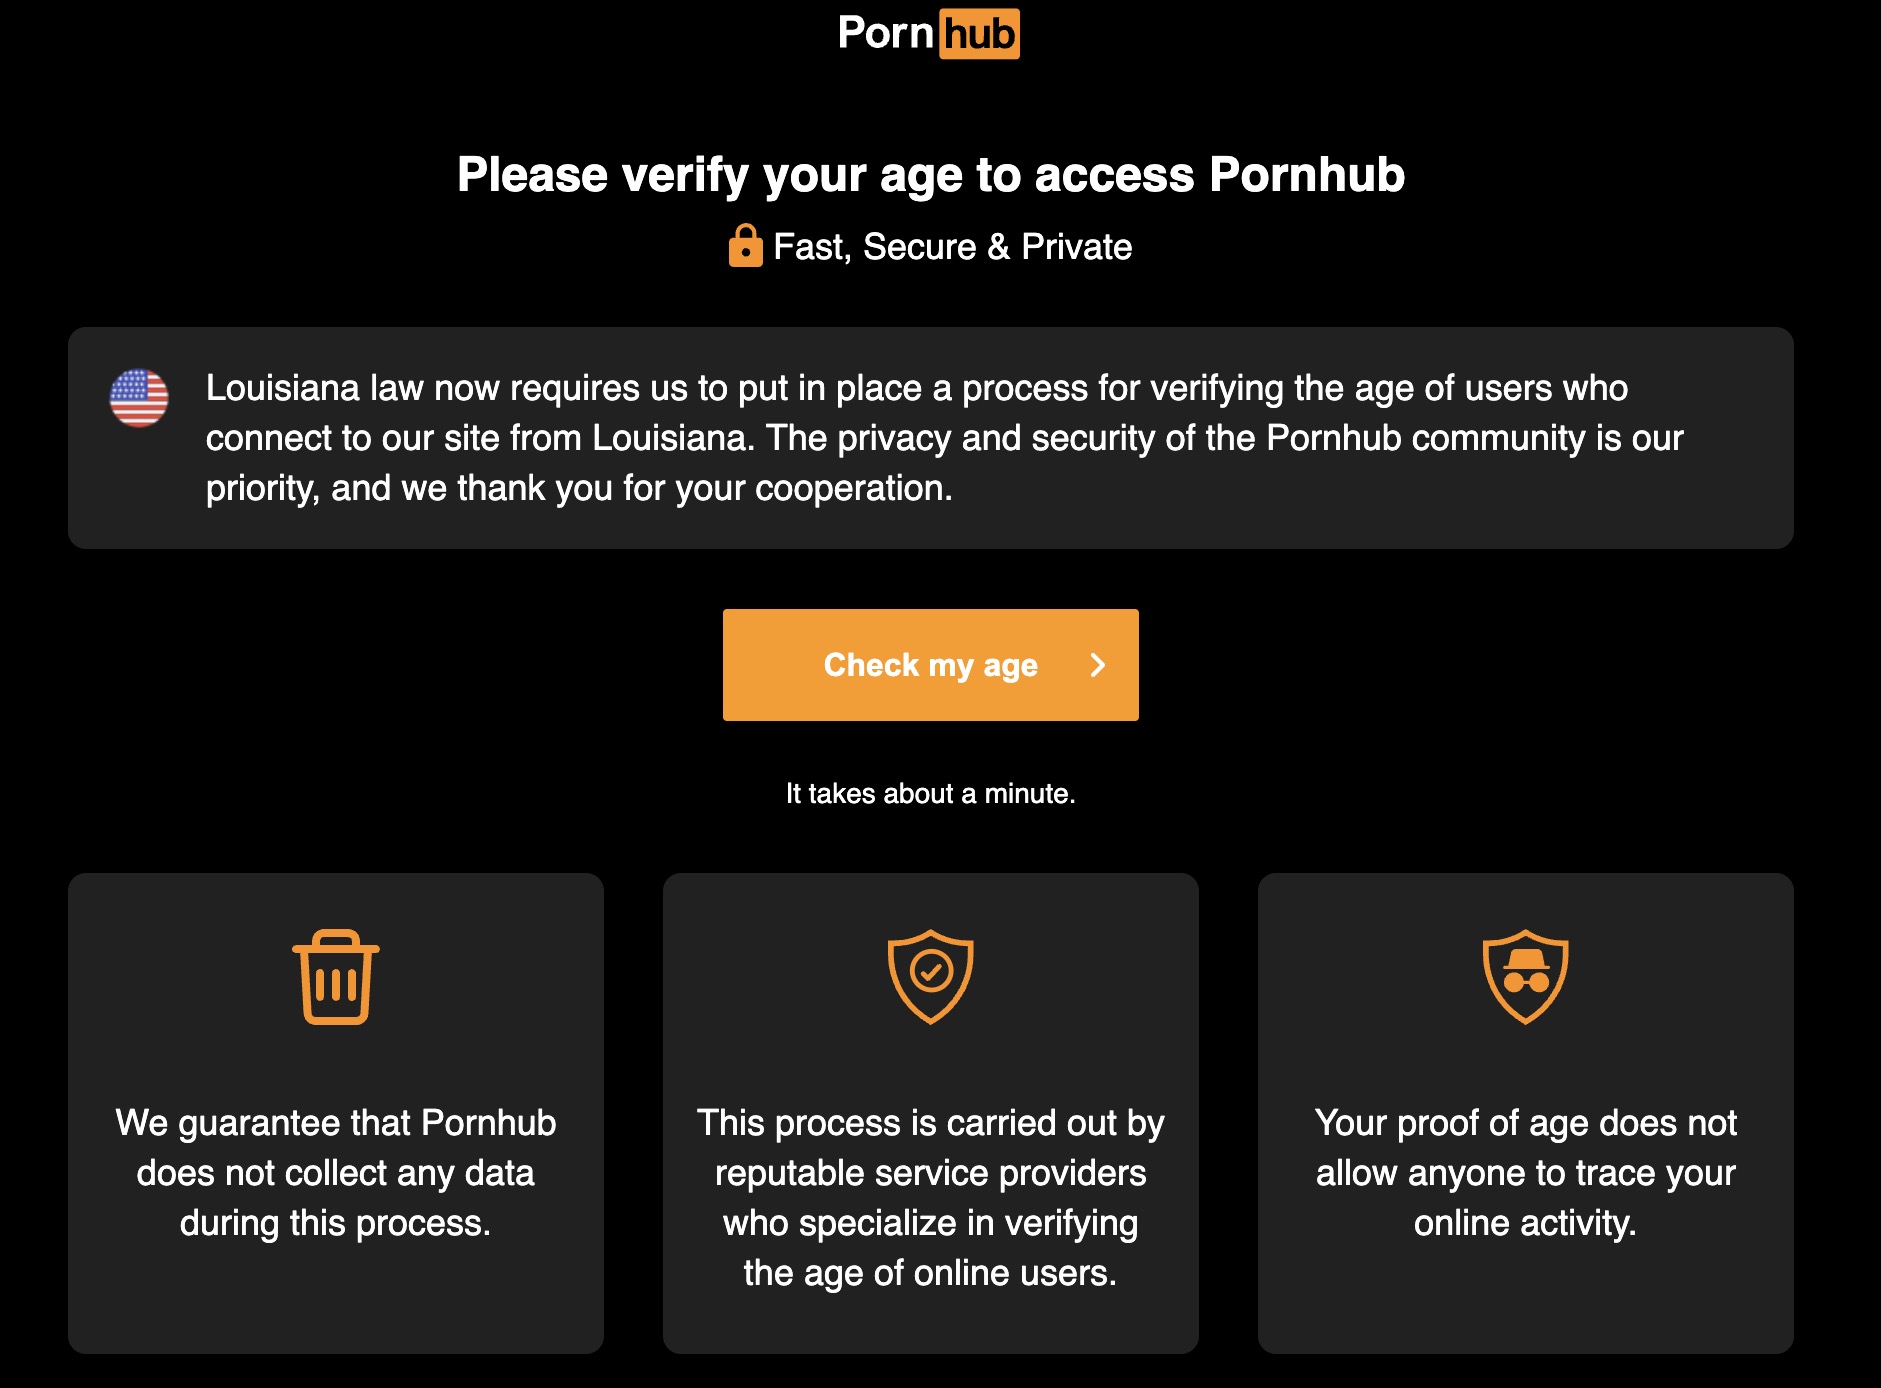 Pornhub.com message for Louisiana-based users.